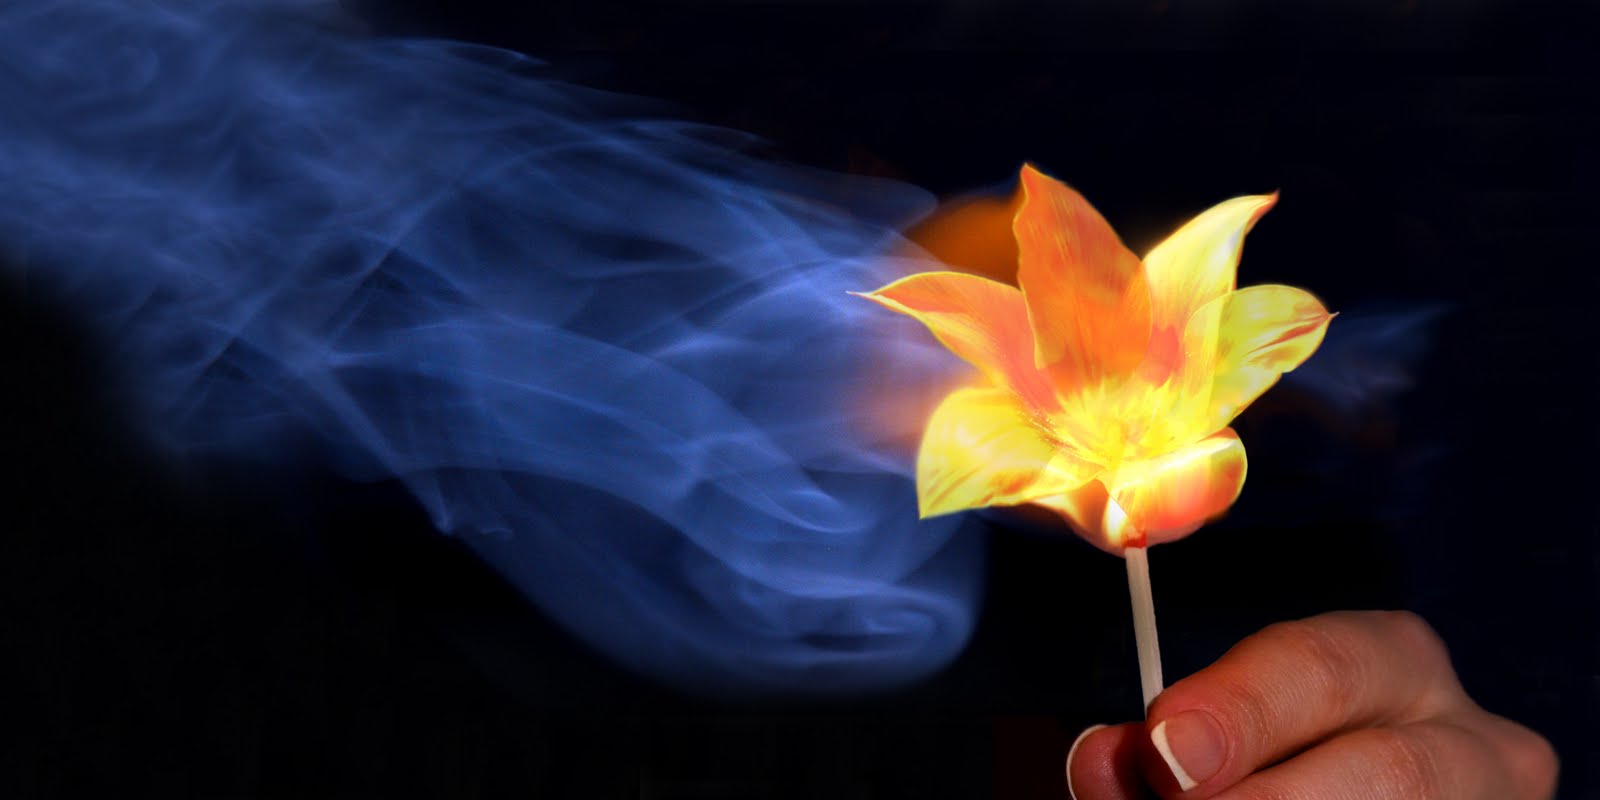 Elémentalia  Smoke+flower+hand+large+bright